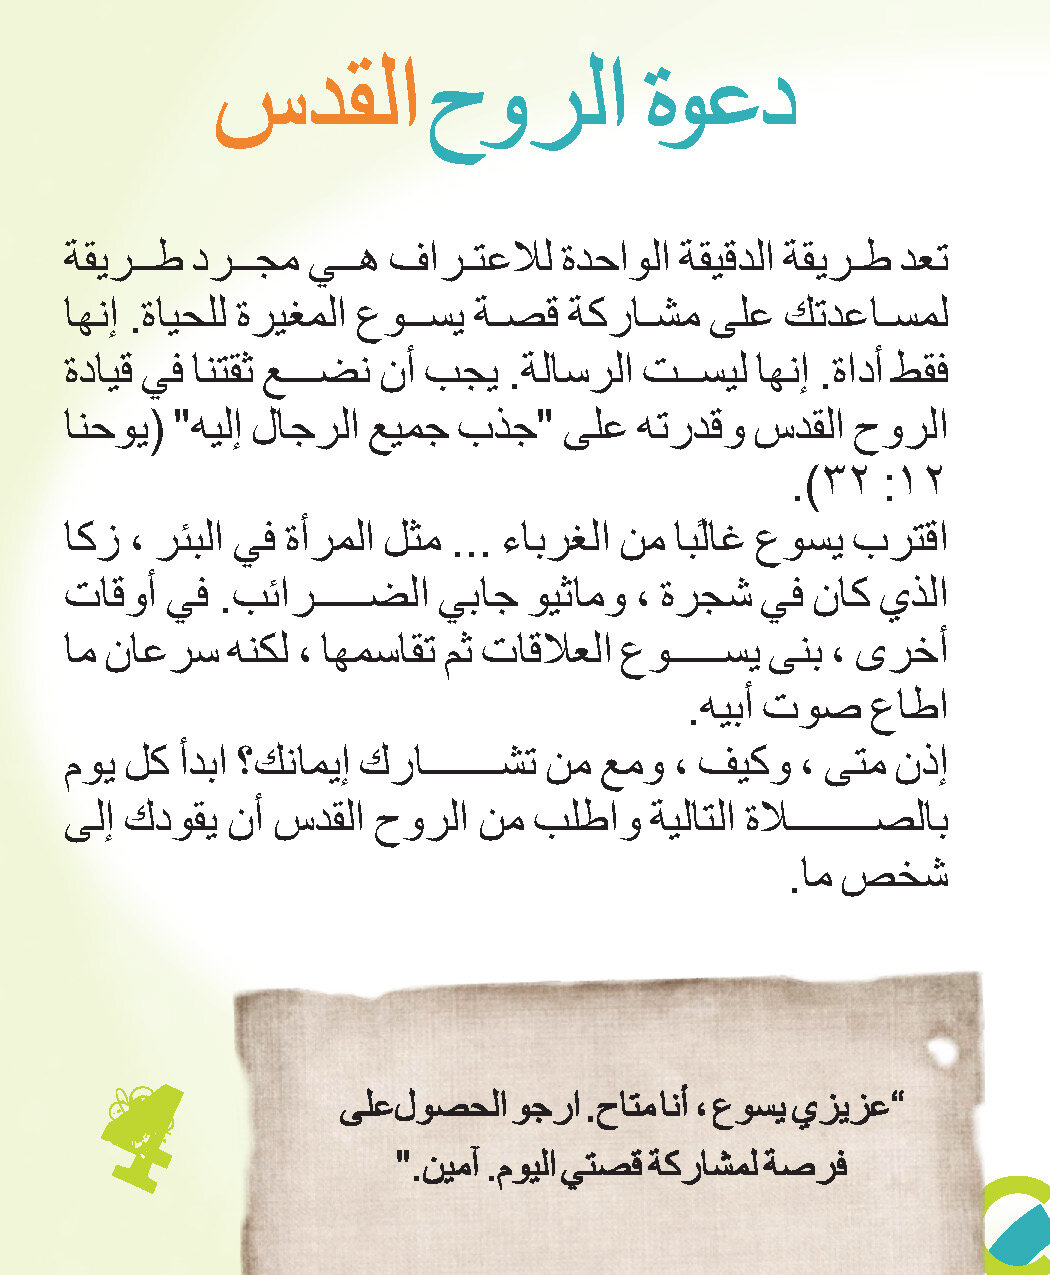 Arabic_Zubi_CDR-based_Page_04.jpg